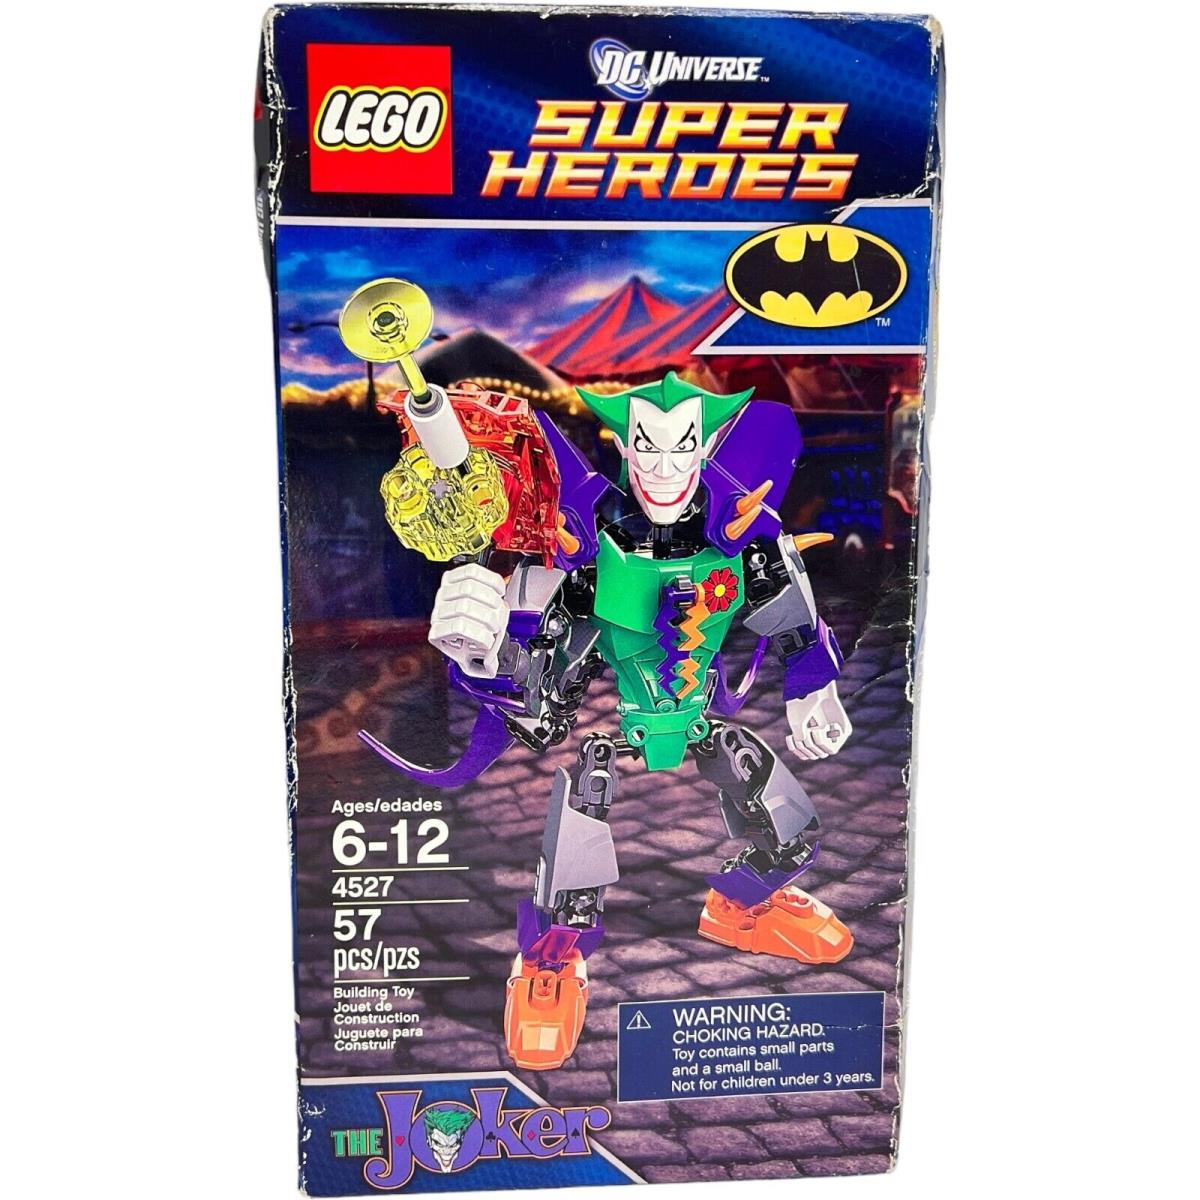 Lego 4527 DC Universe Super Heroes The Joker 57 Pcs Building Toy